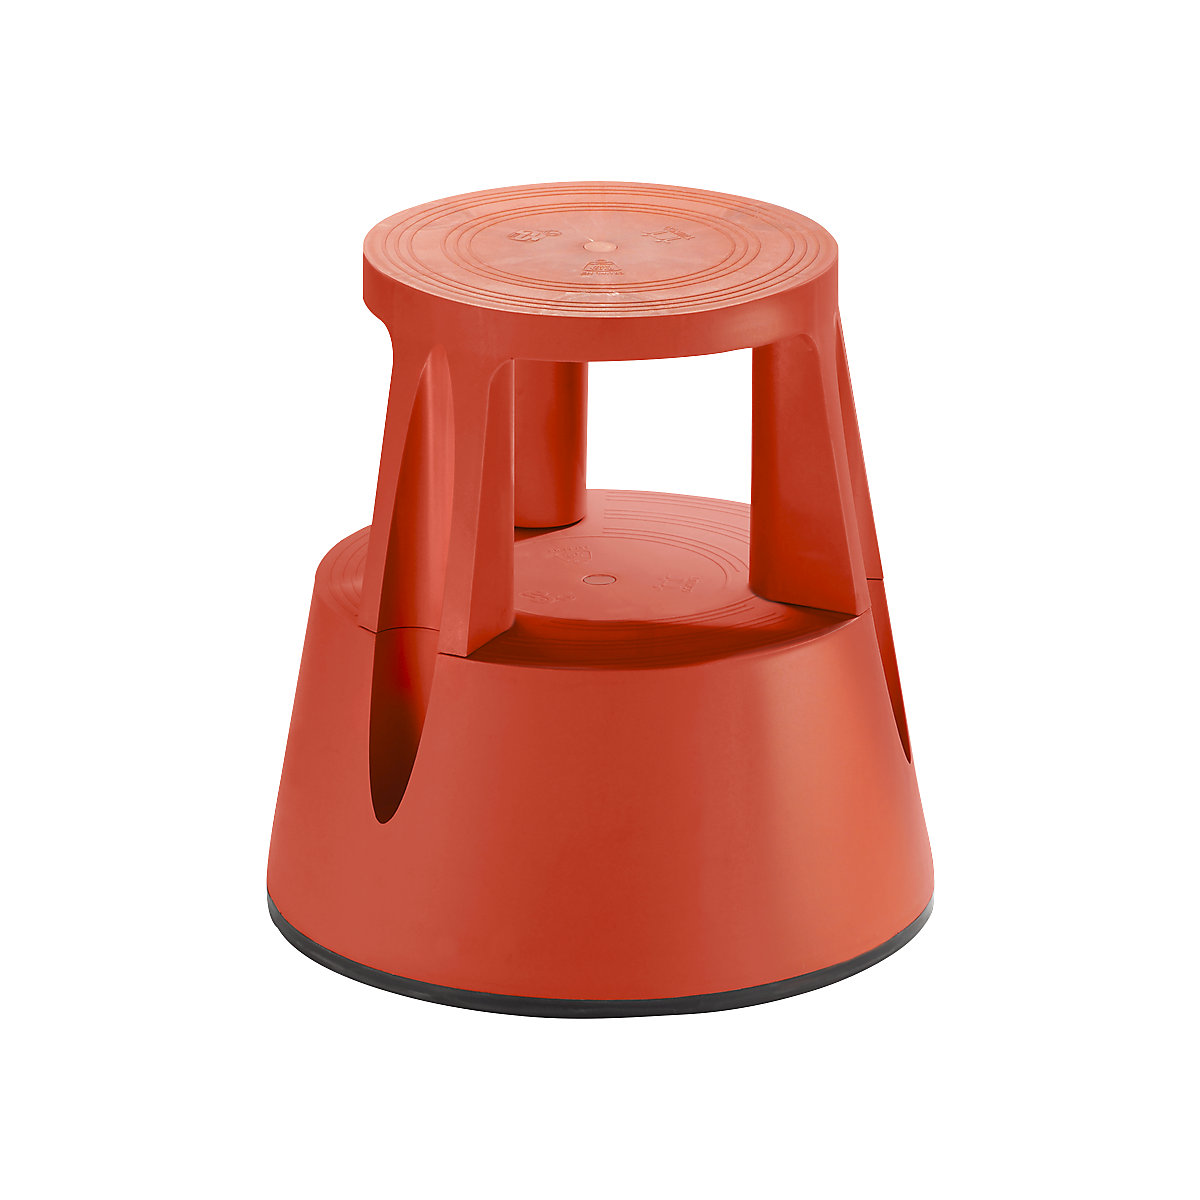 Kick stool made of shatterproof plastic - Twinco